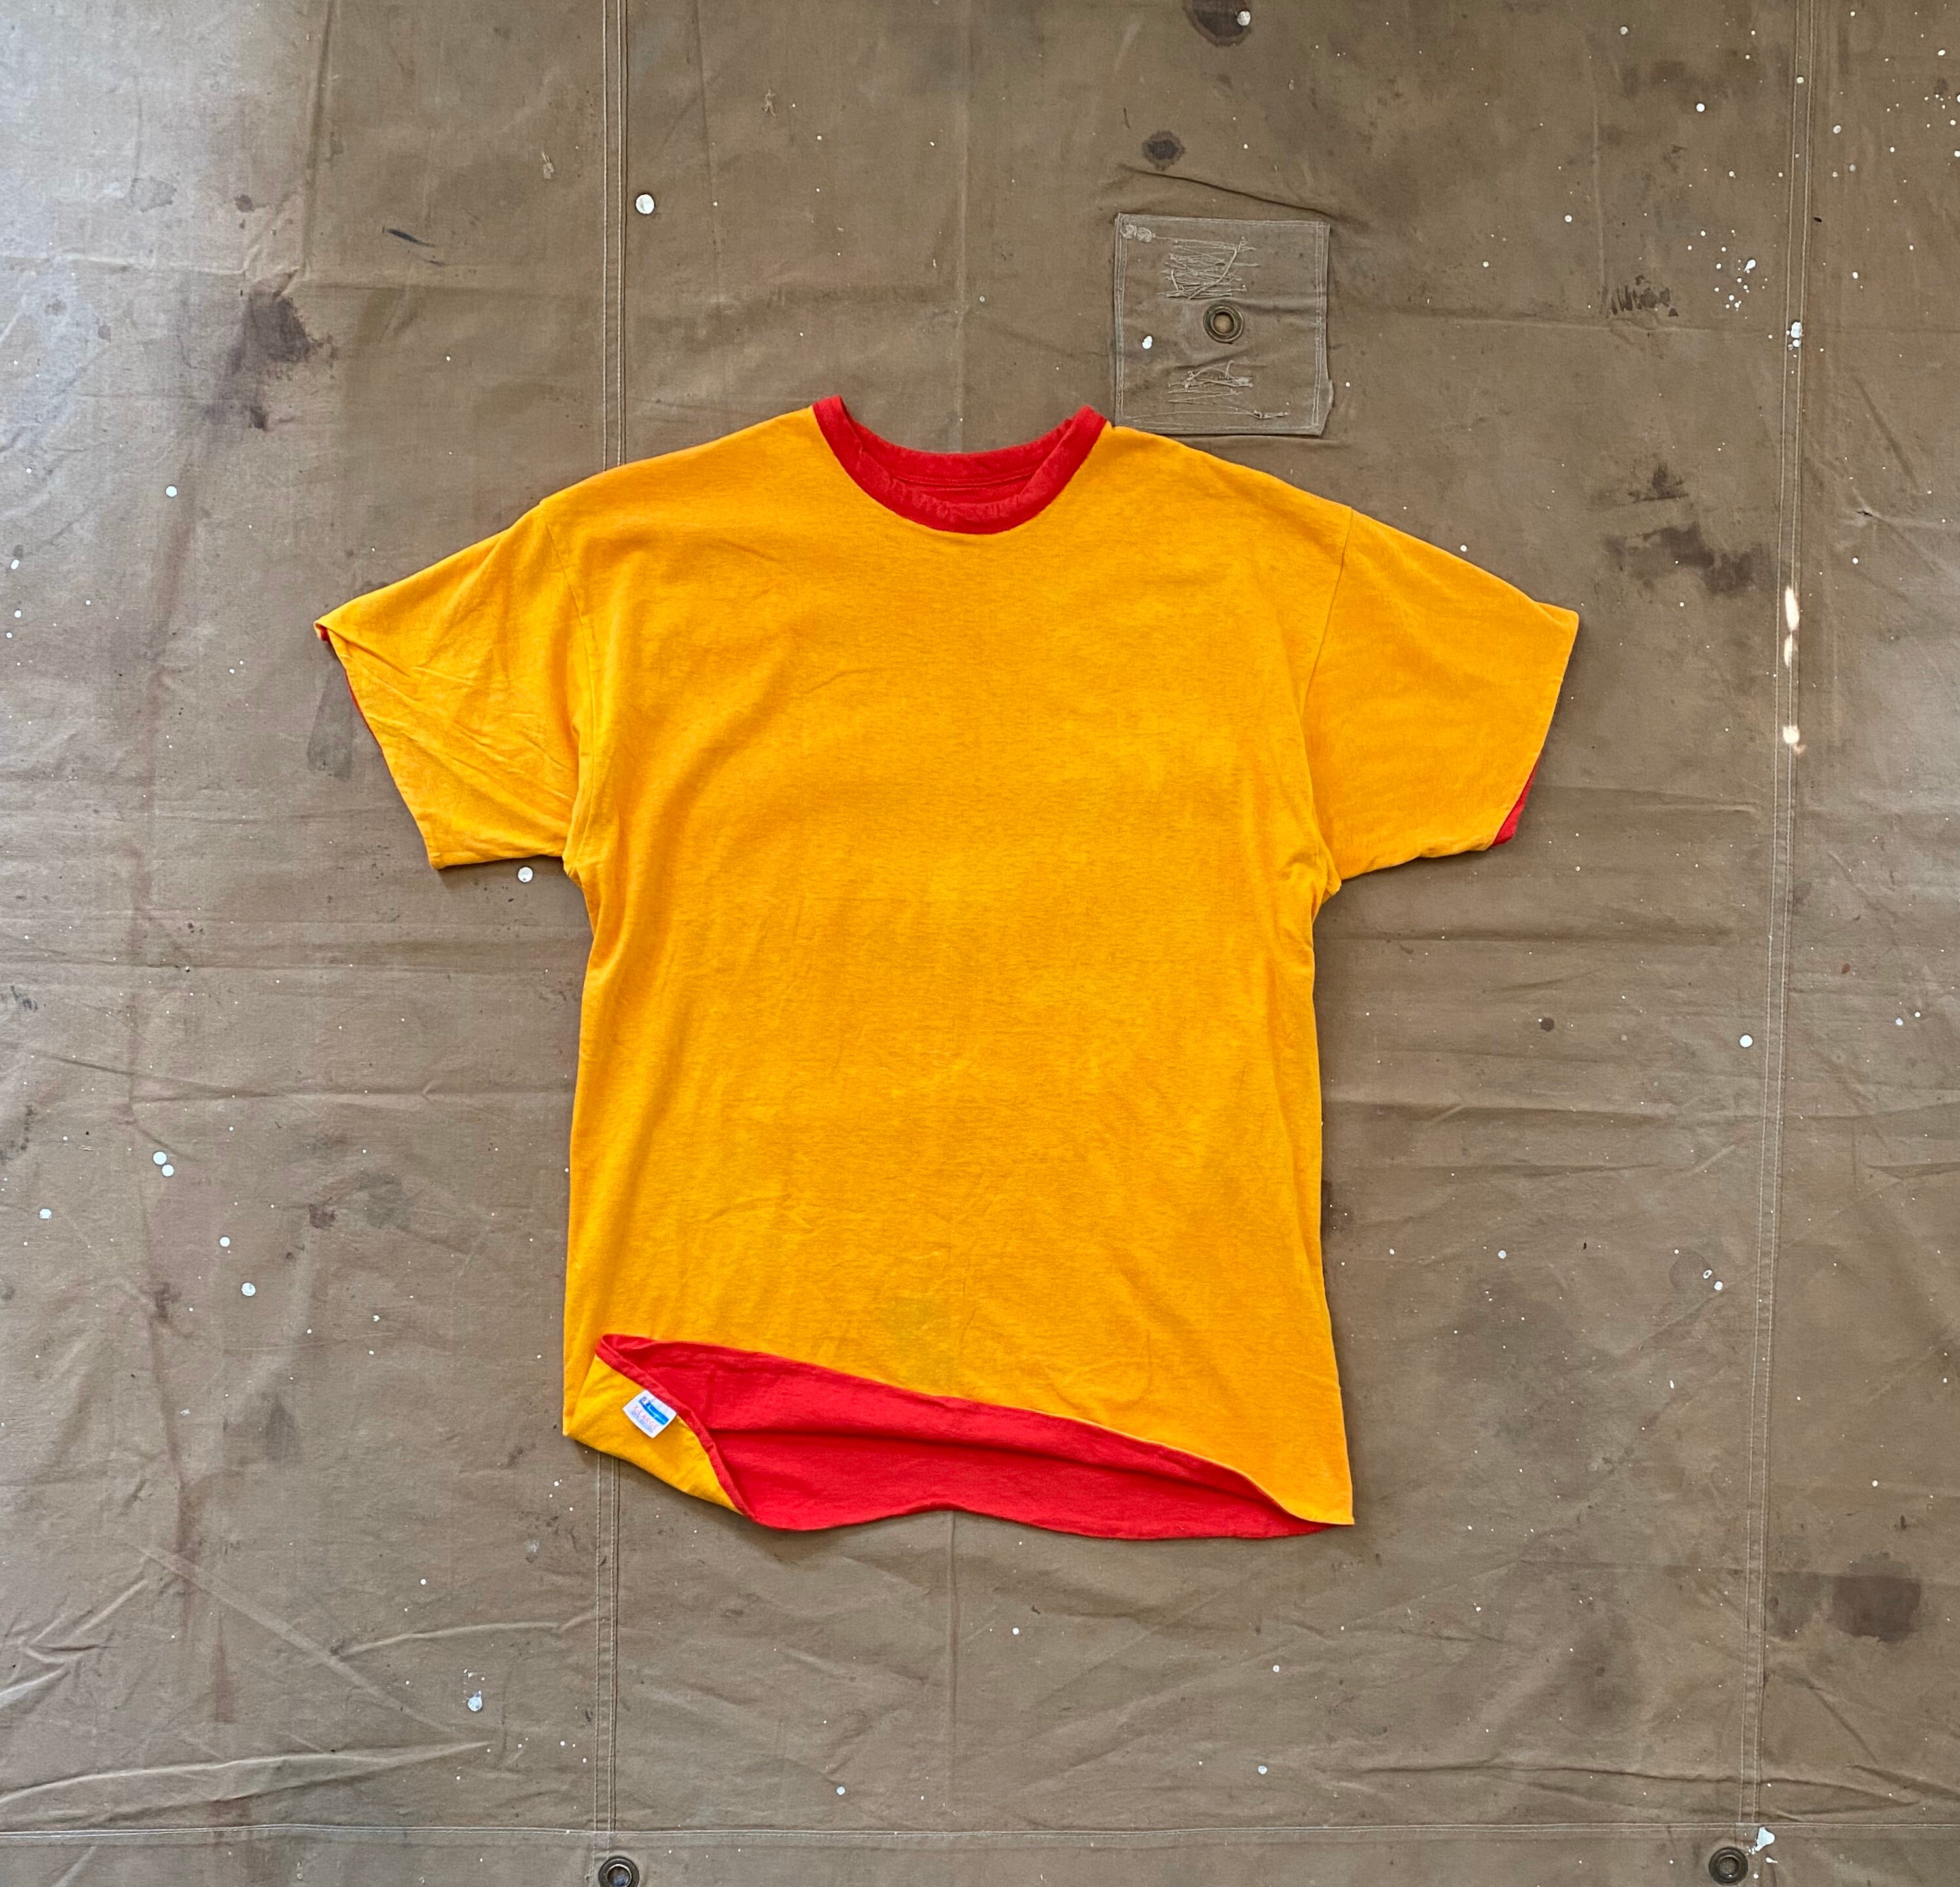 boliger Eventyrer Smag Reversible '70s Champion T-shirt - Etsy